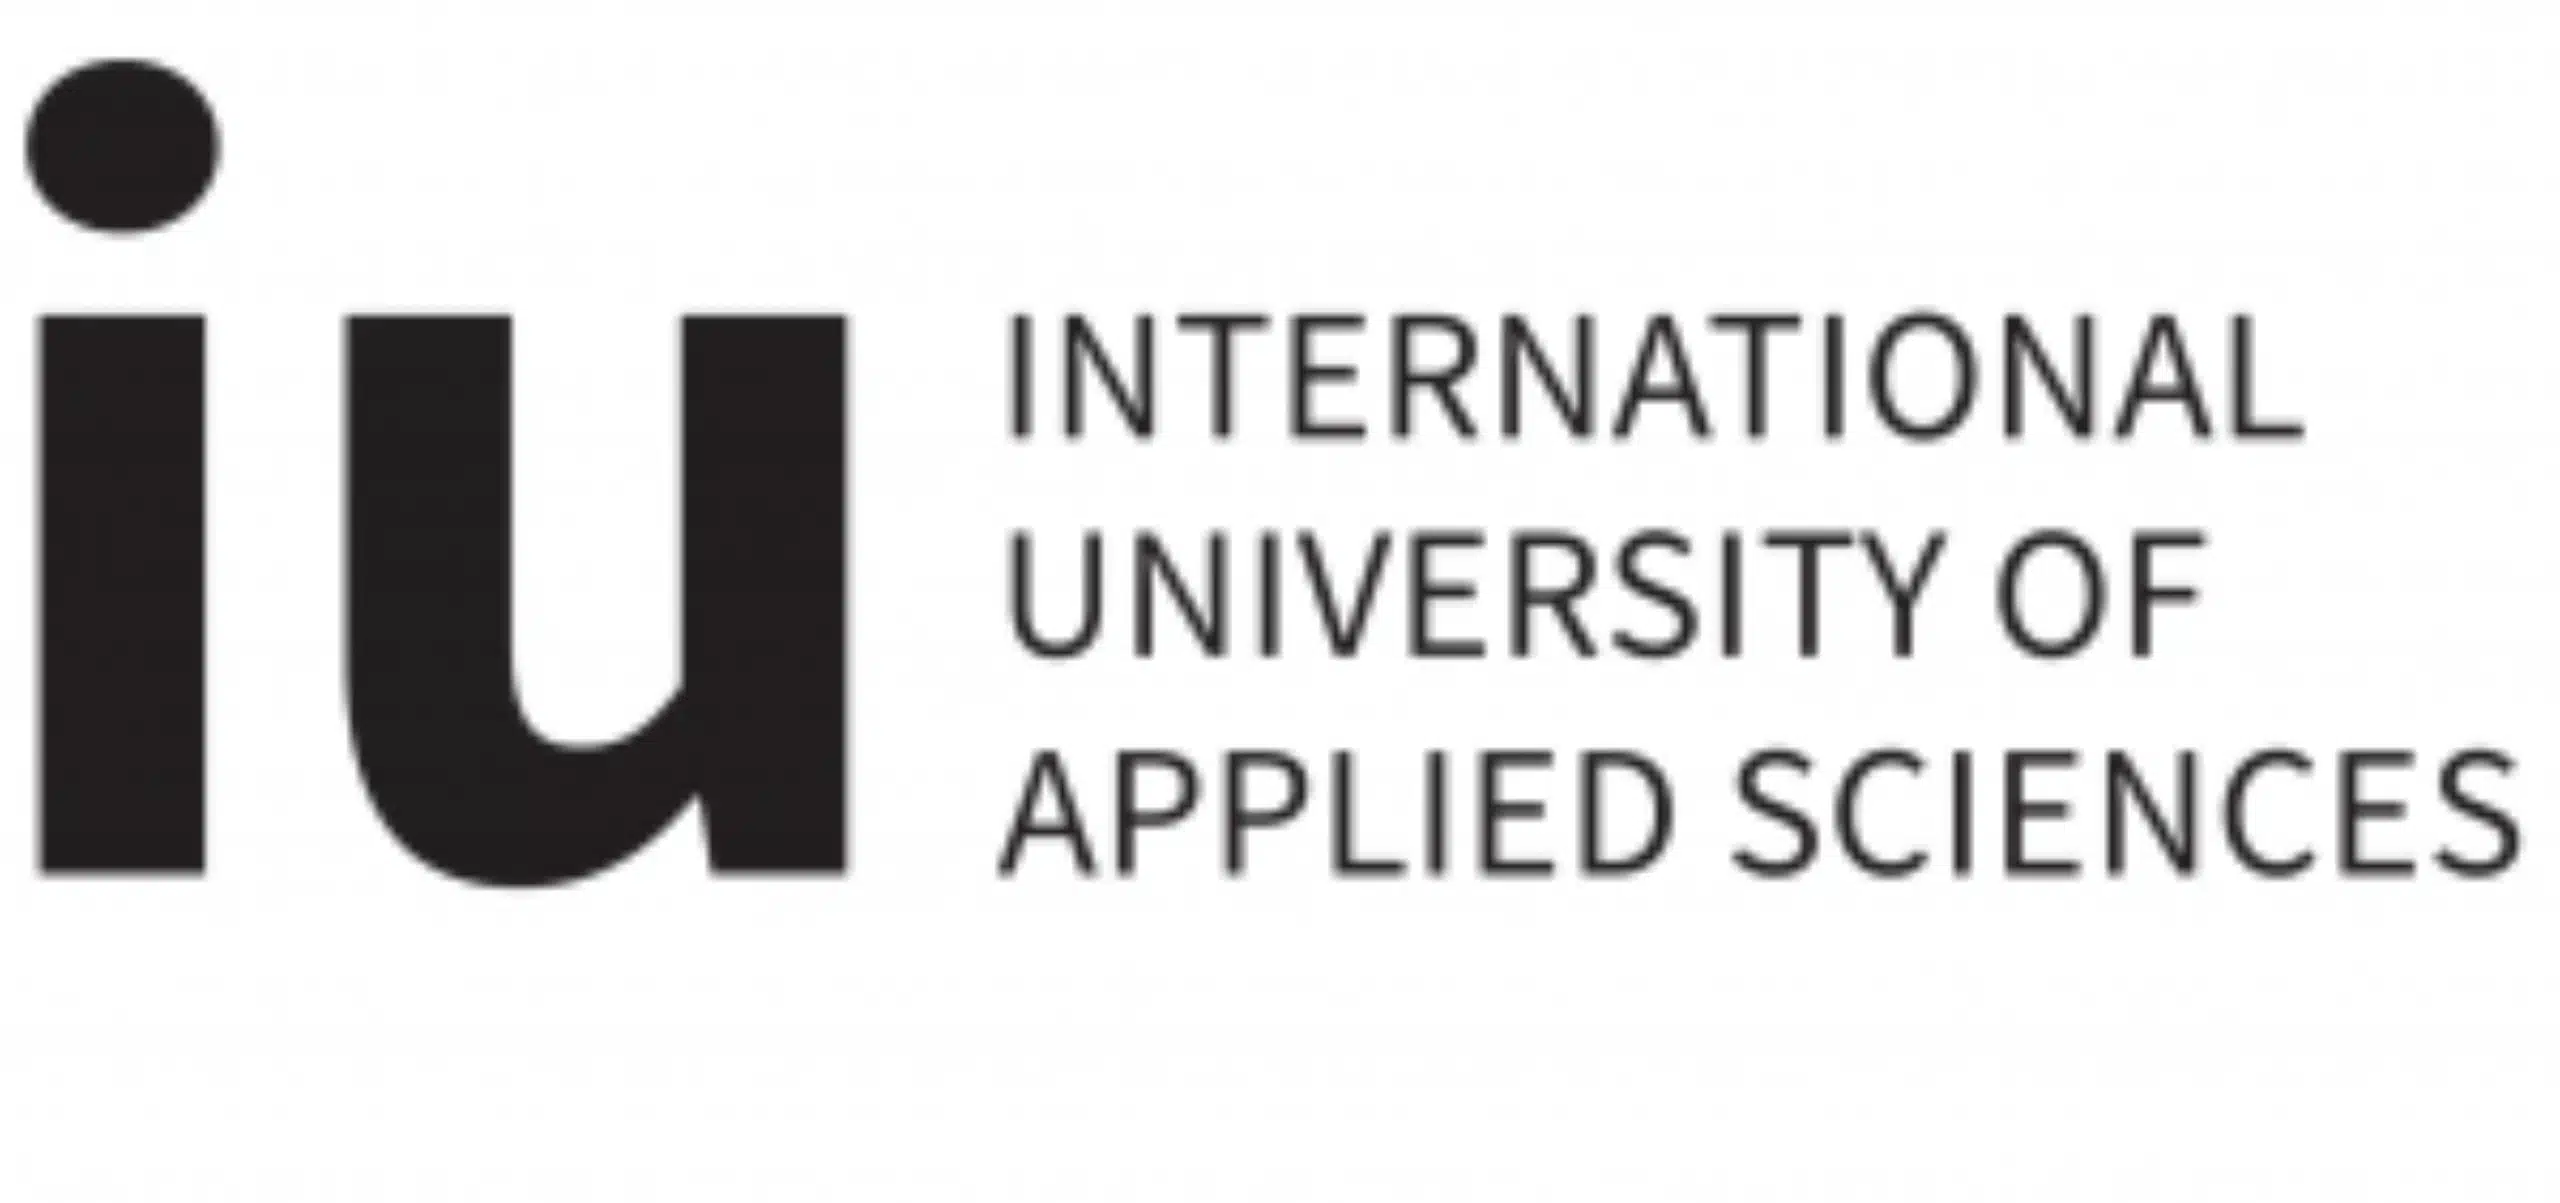 Internation University of Applied Sciences